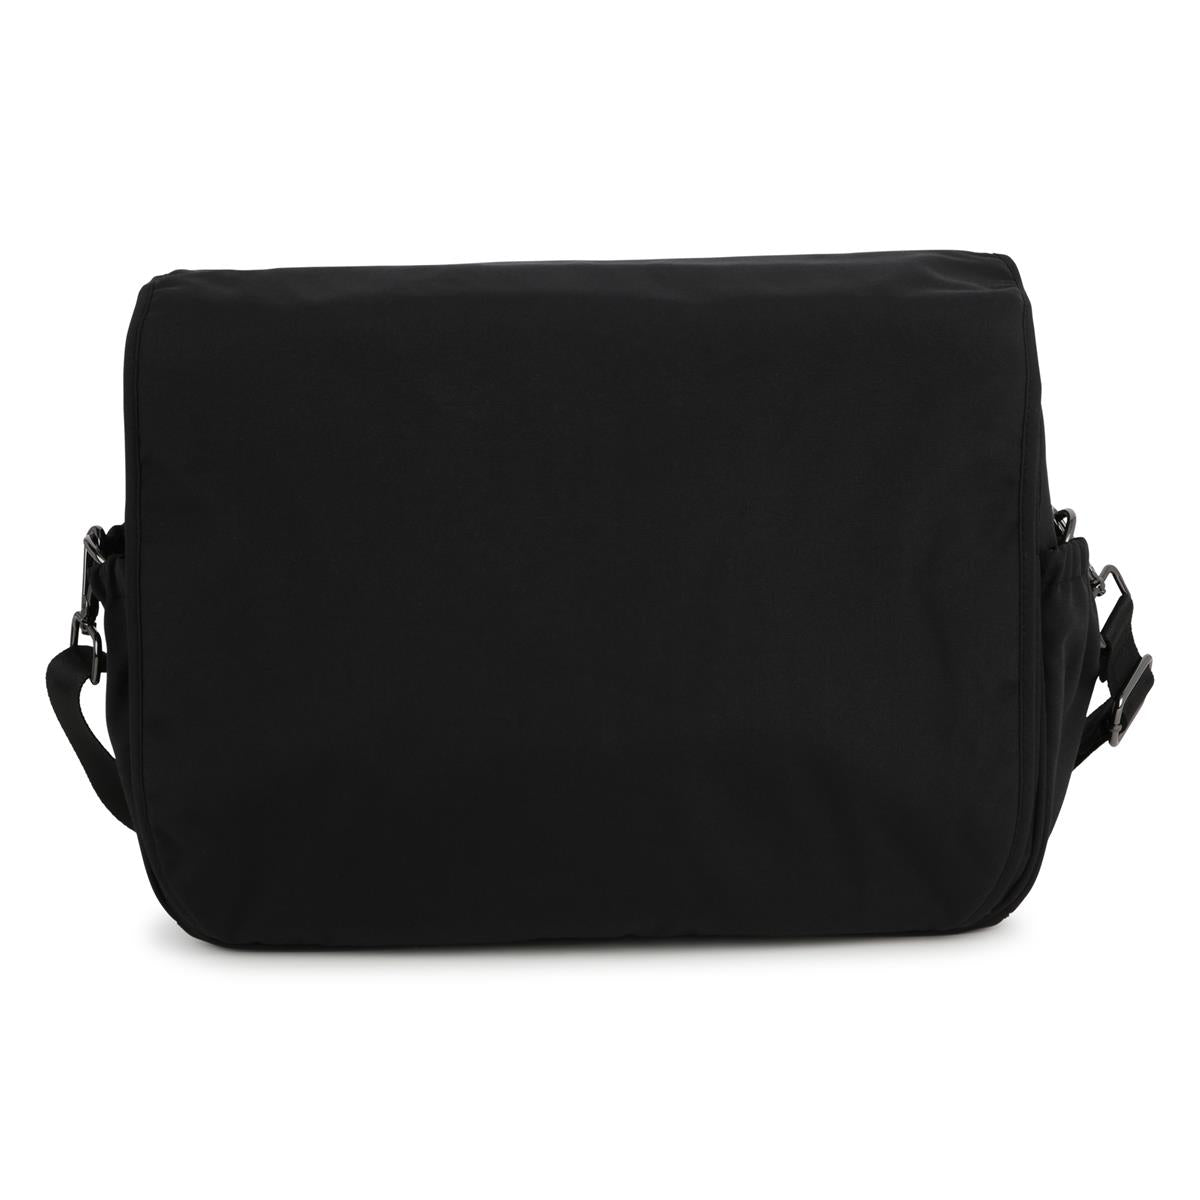 Black Handbag(37.5x27x14.5cm)